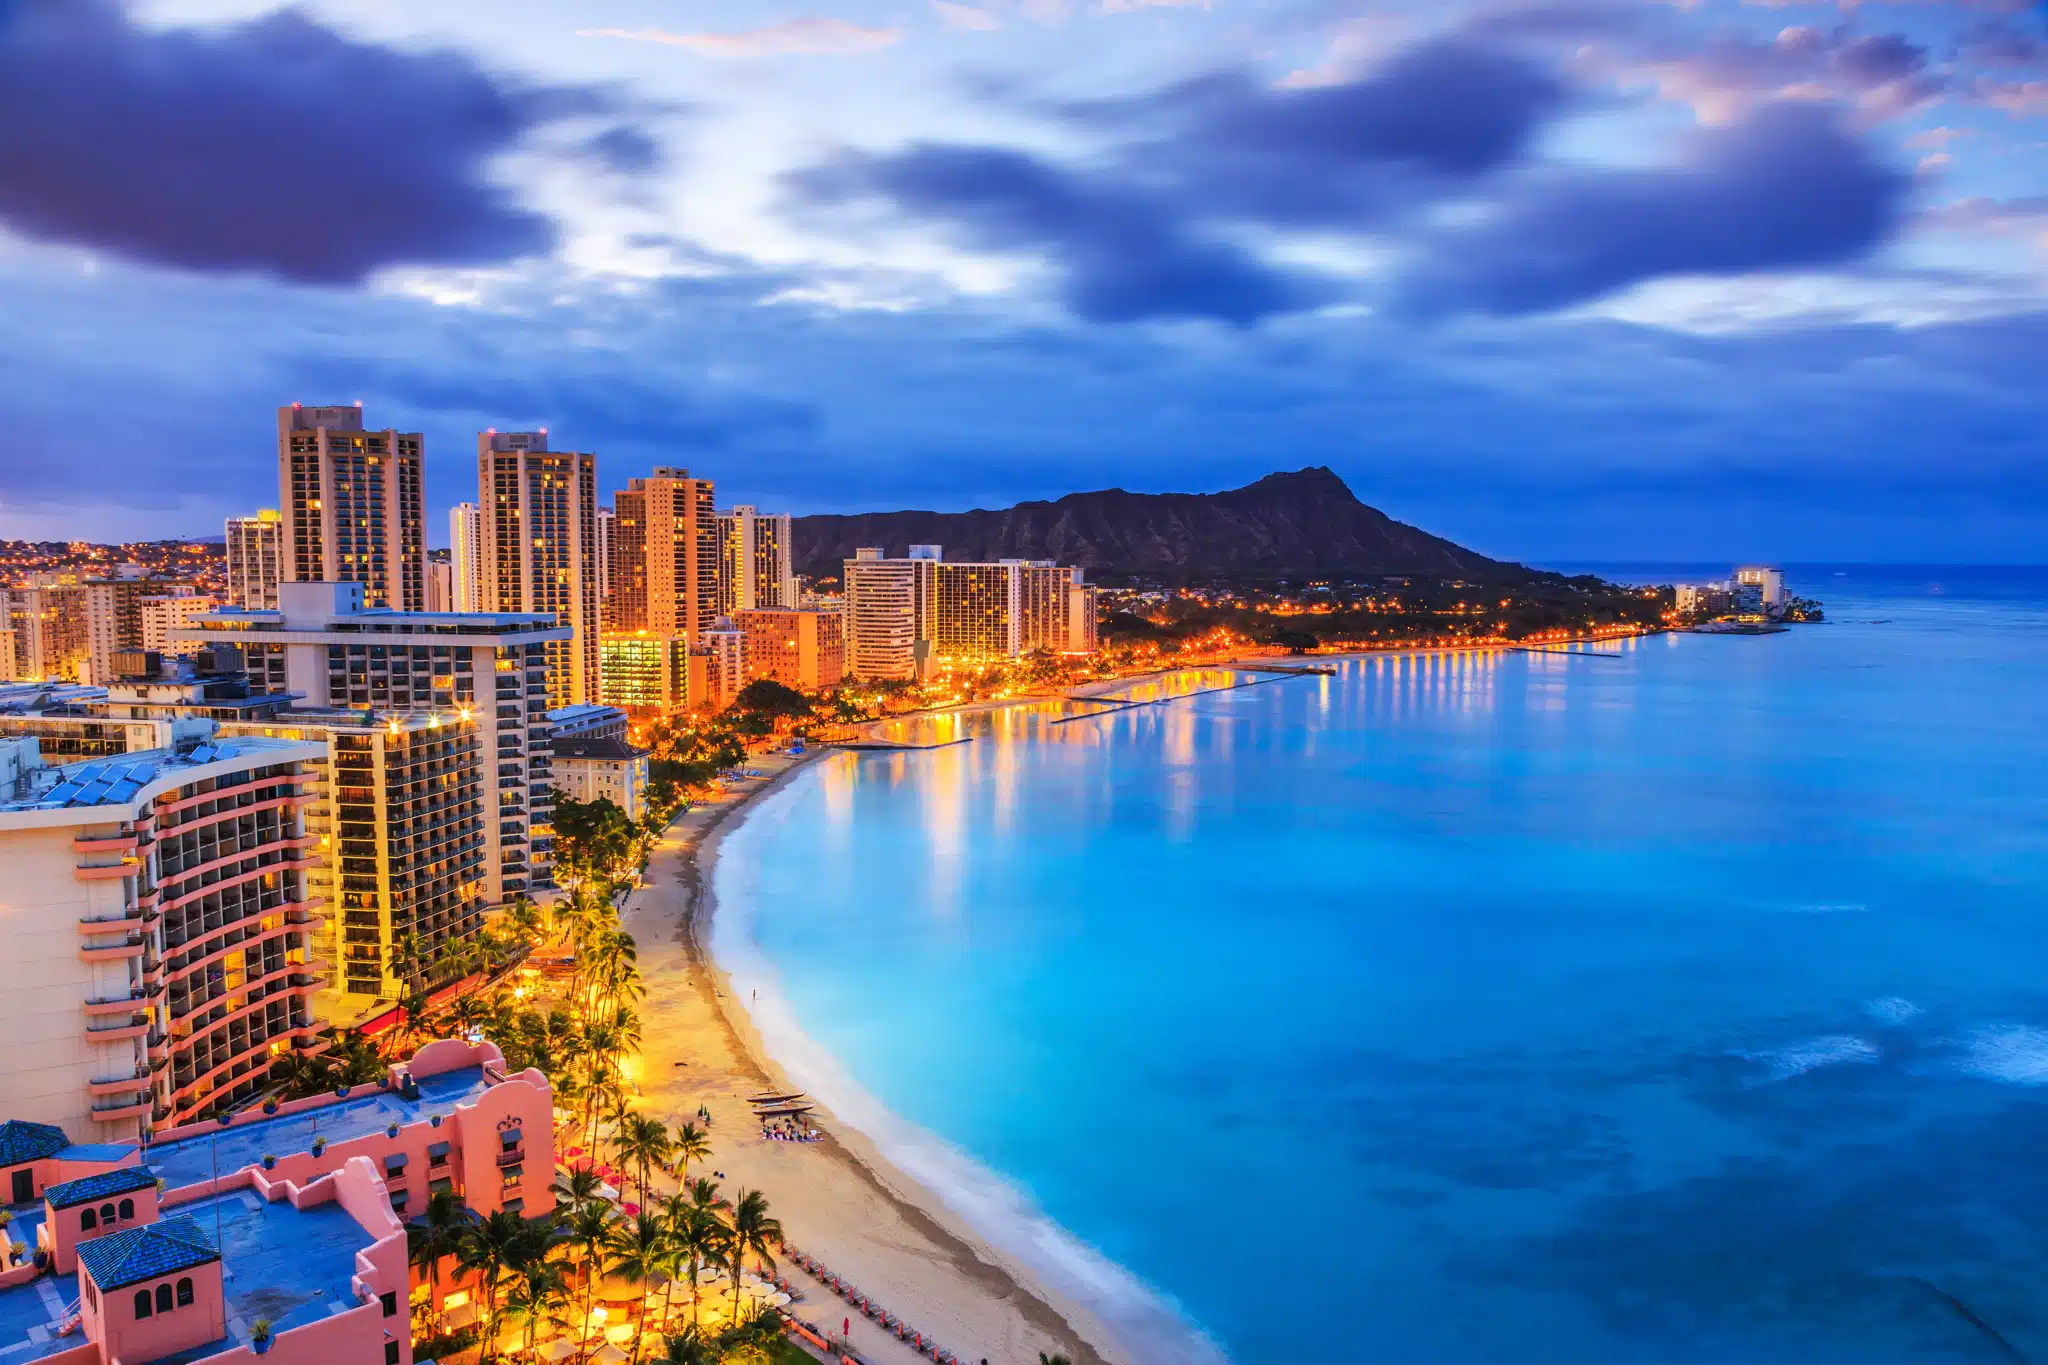 Honolulu is a Town located in the city of Honolulu on Oahu, Hawaii